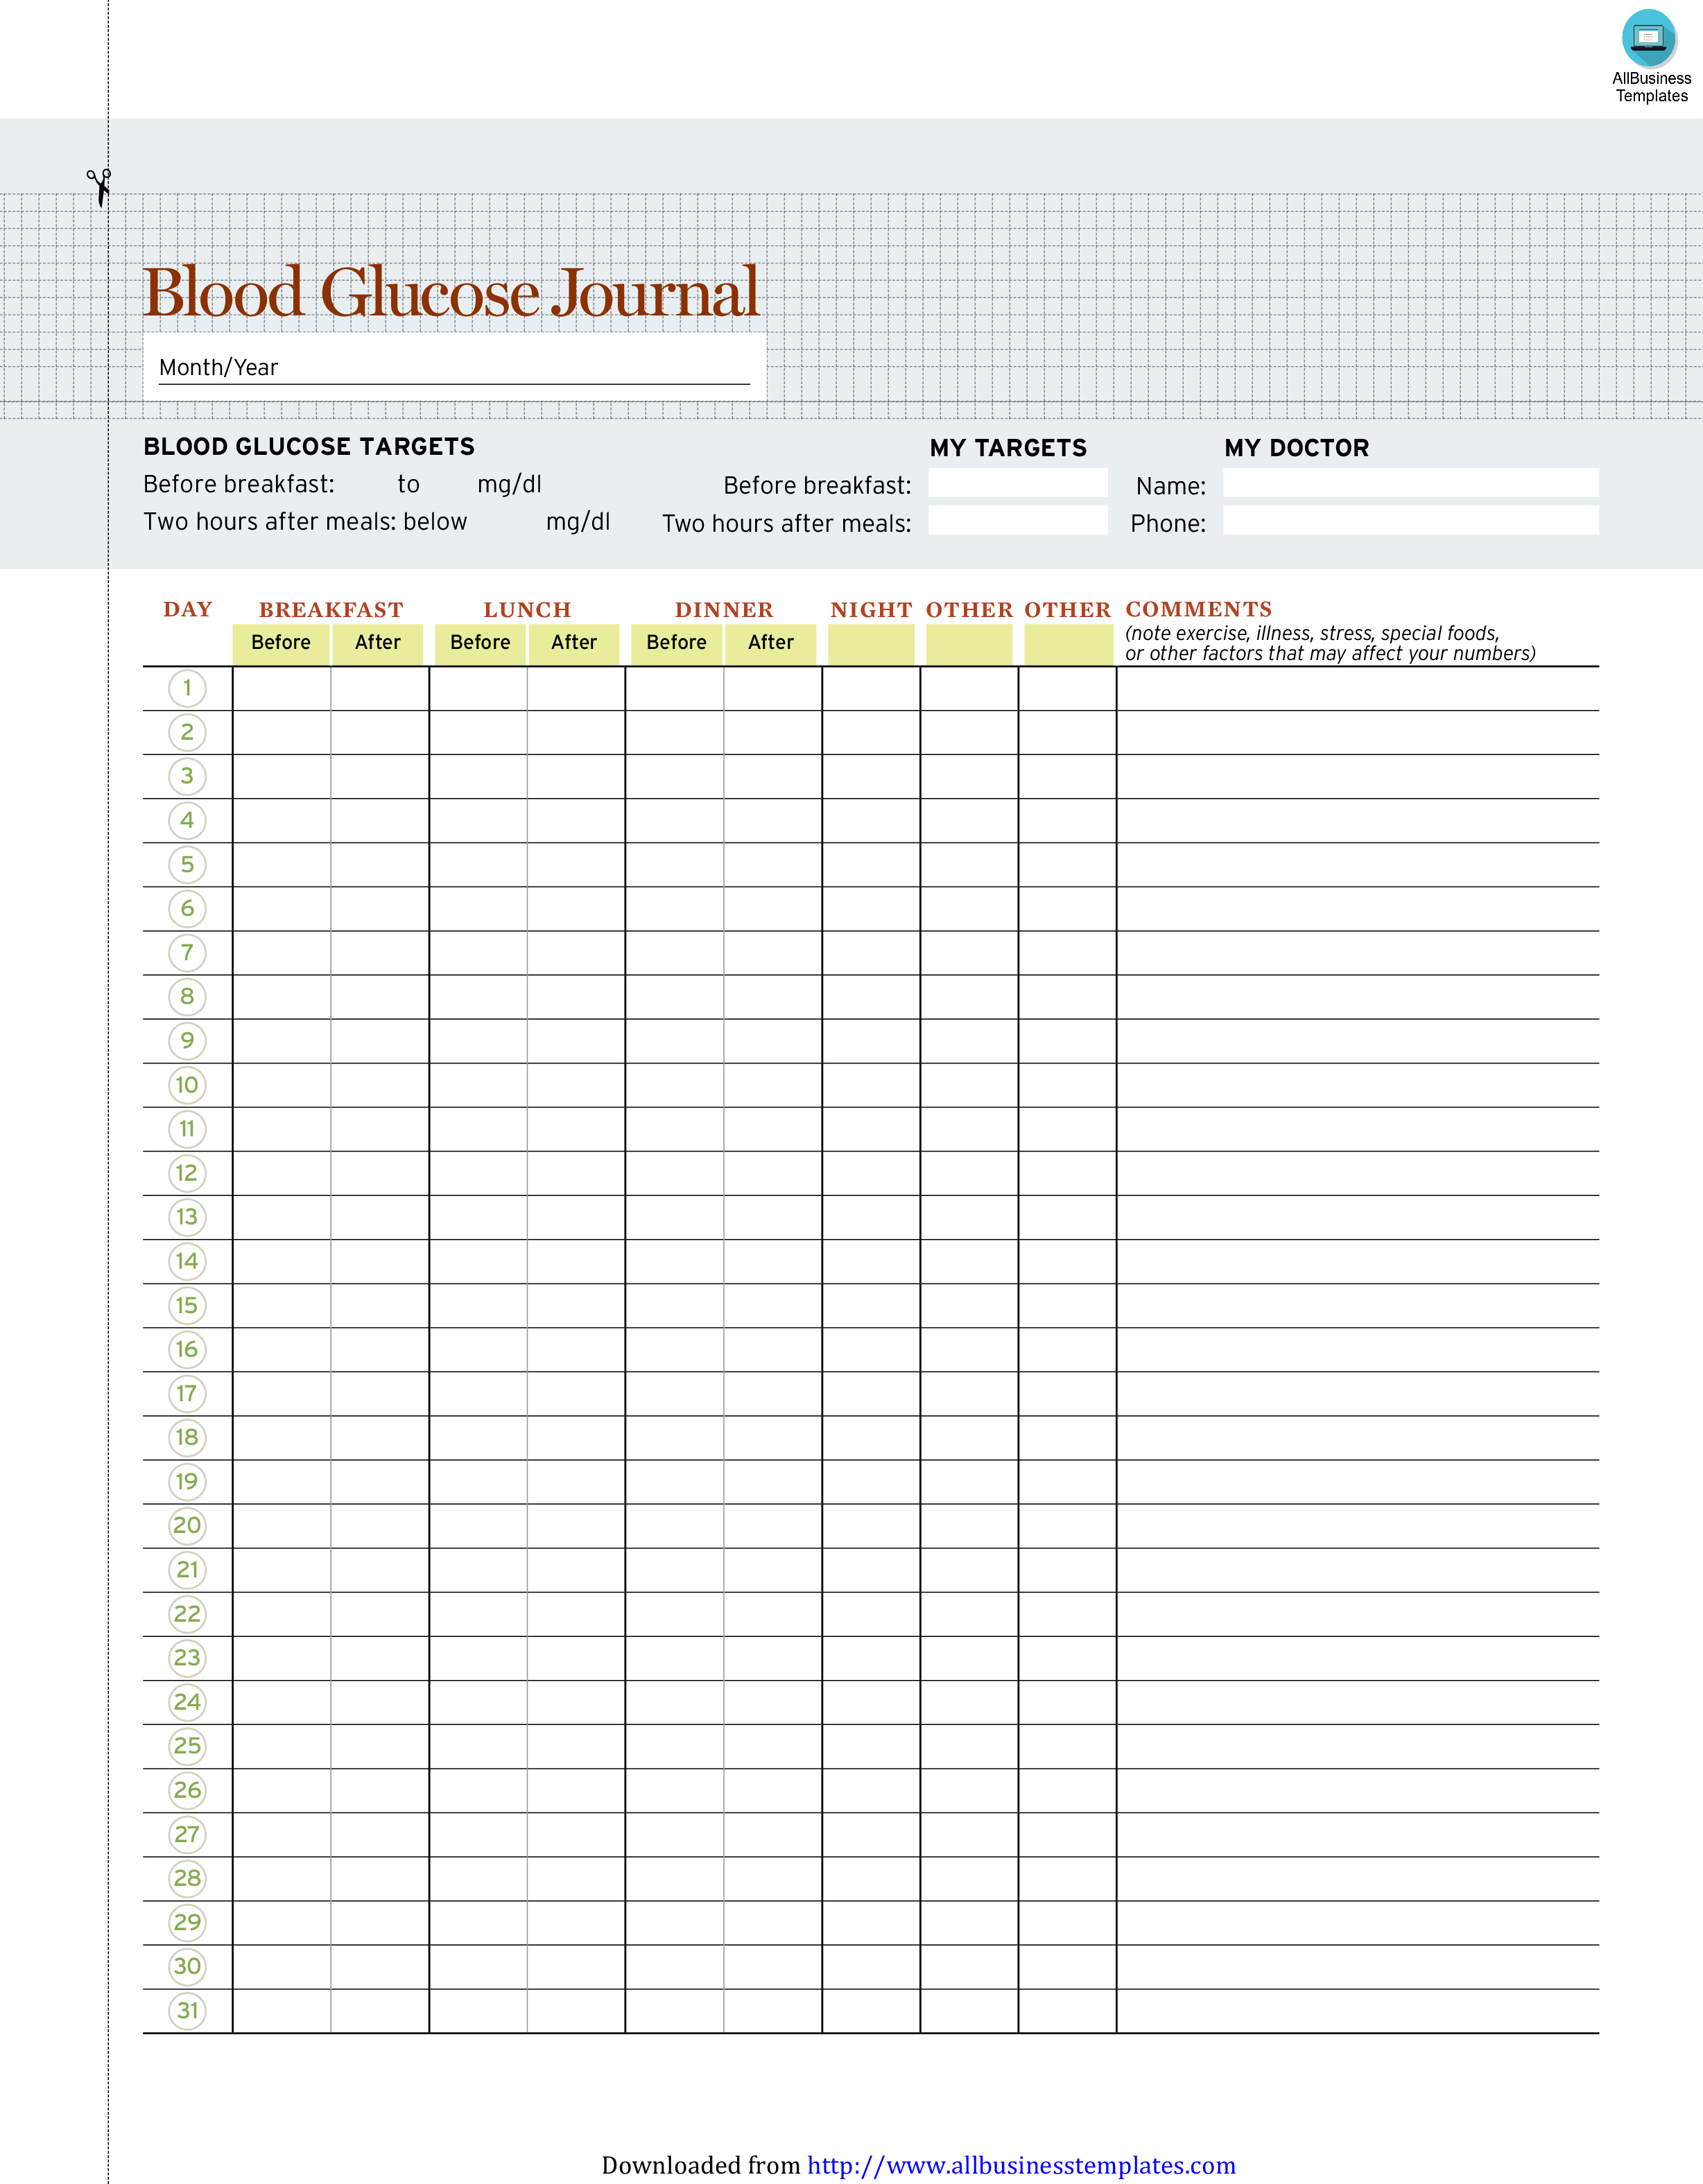 blood glucose journal plantilla imagen principal